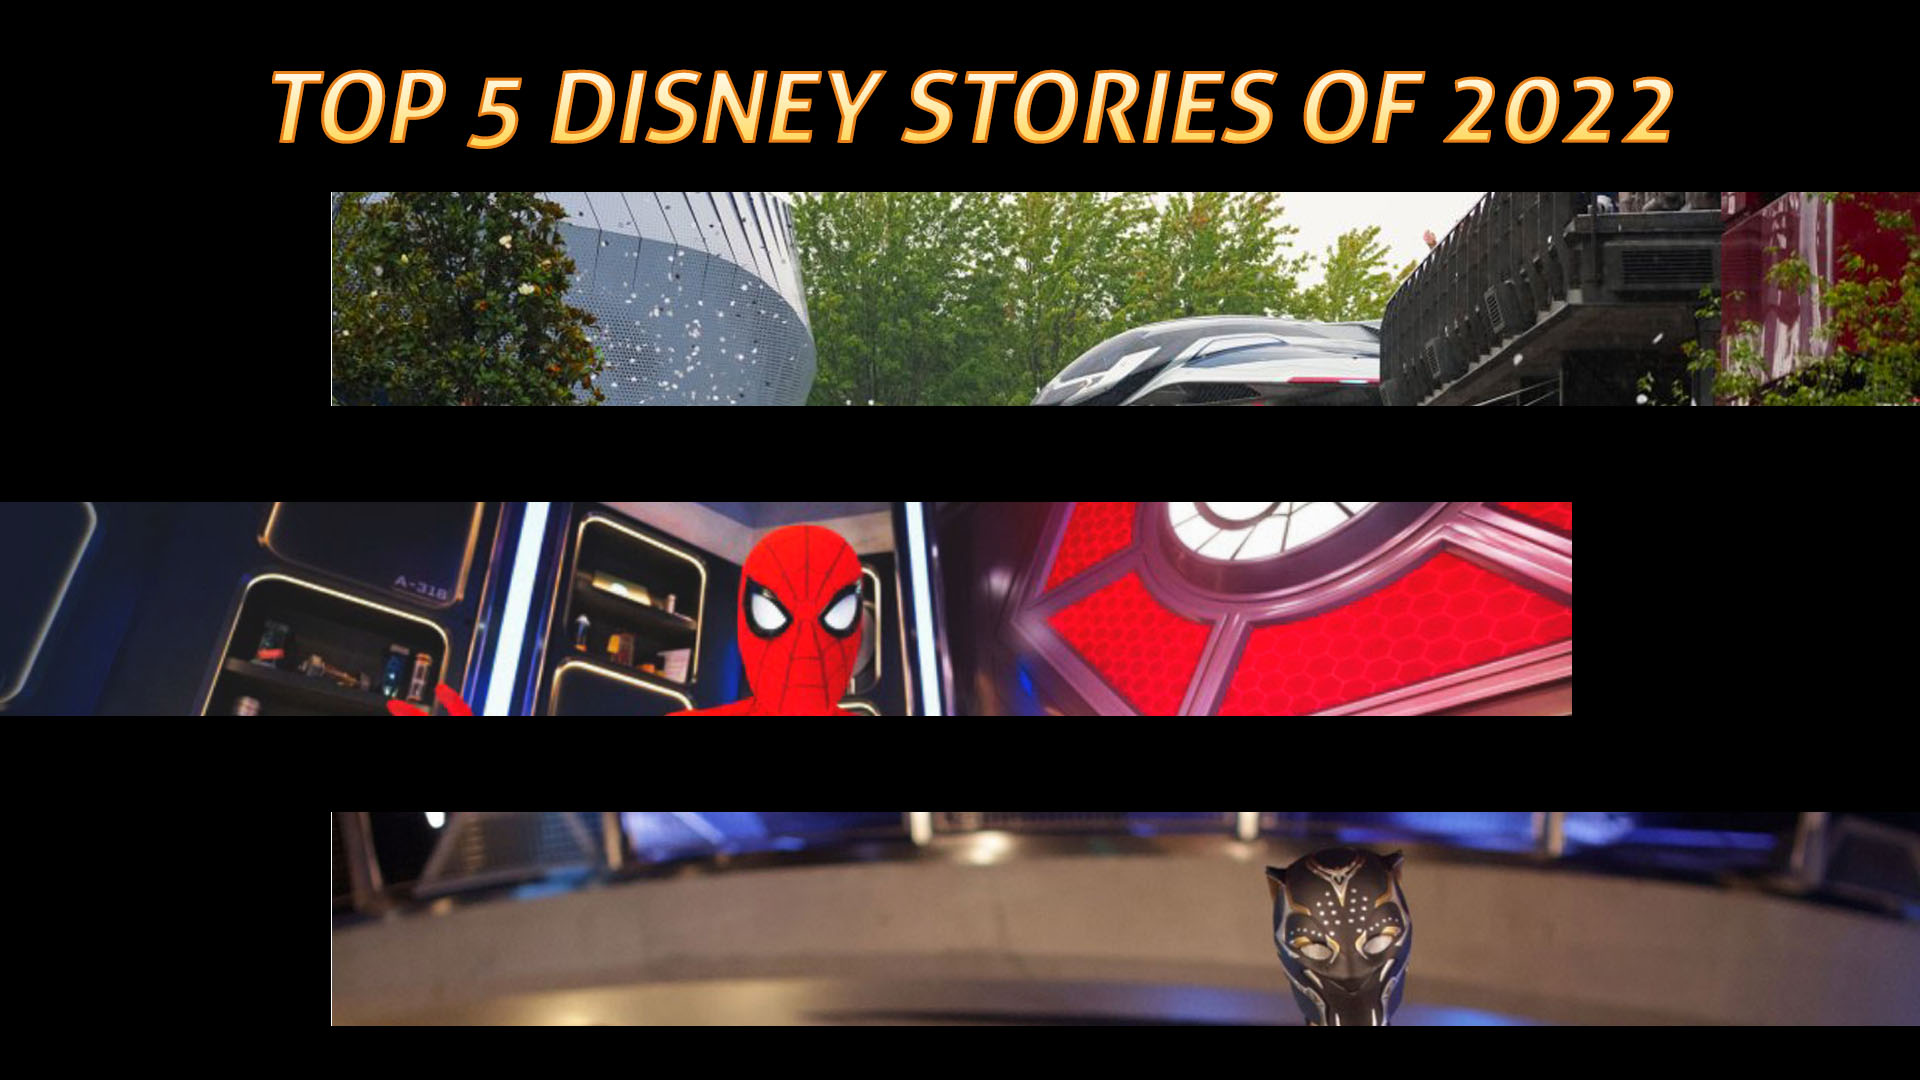 Top 5 Disney Stories of 2022: #4 Avengers Campus Paris